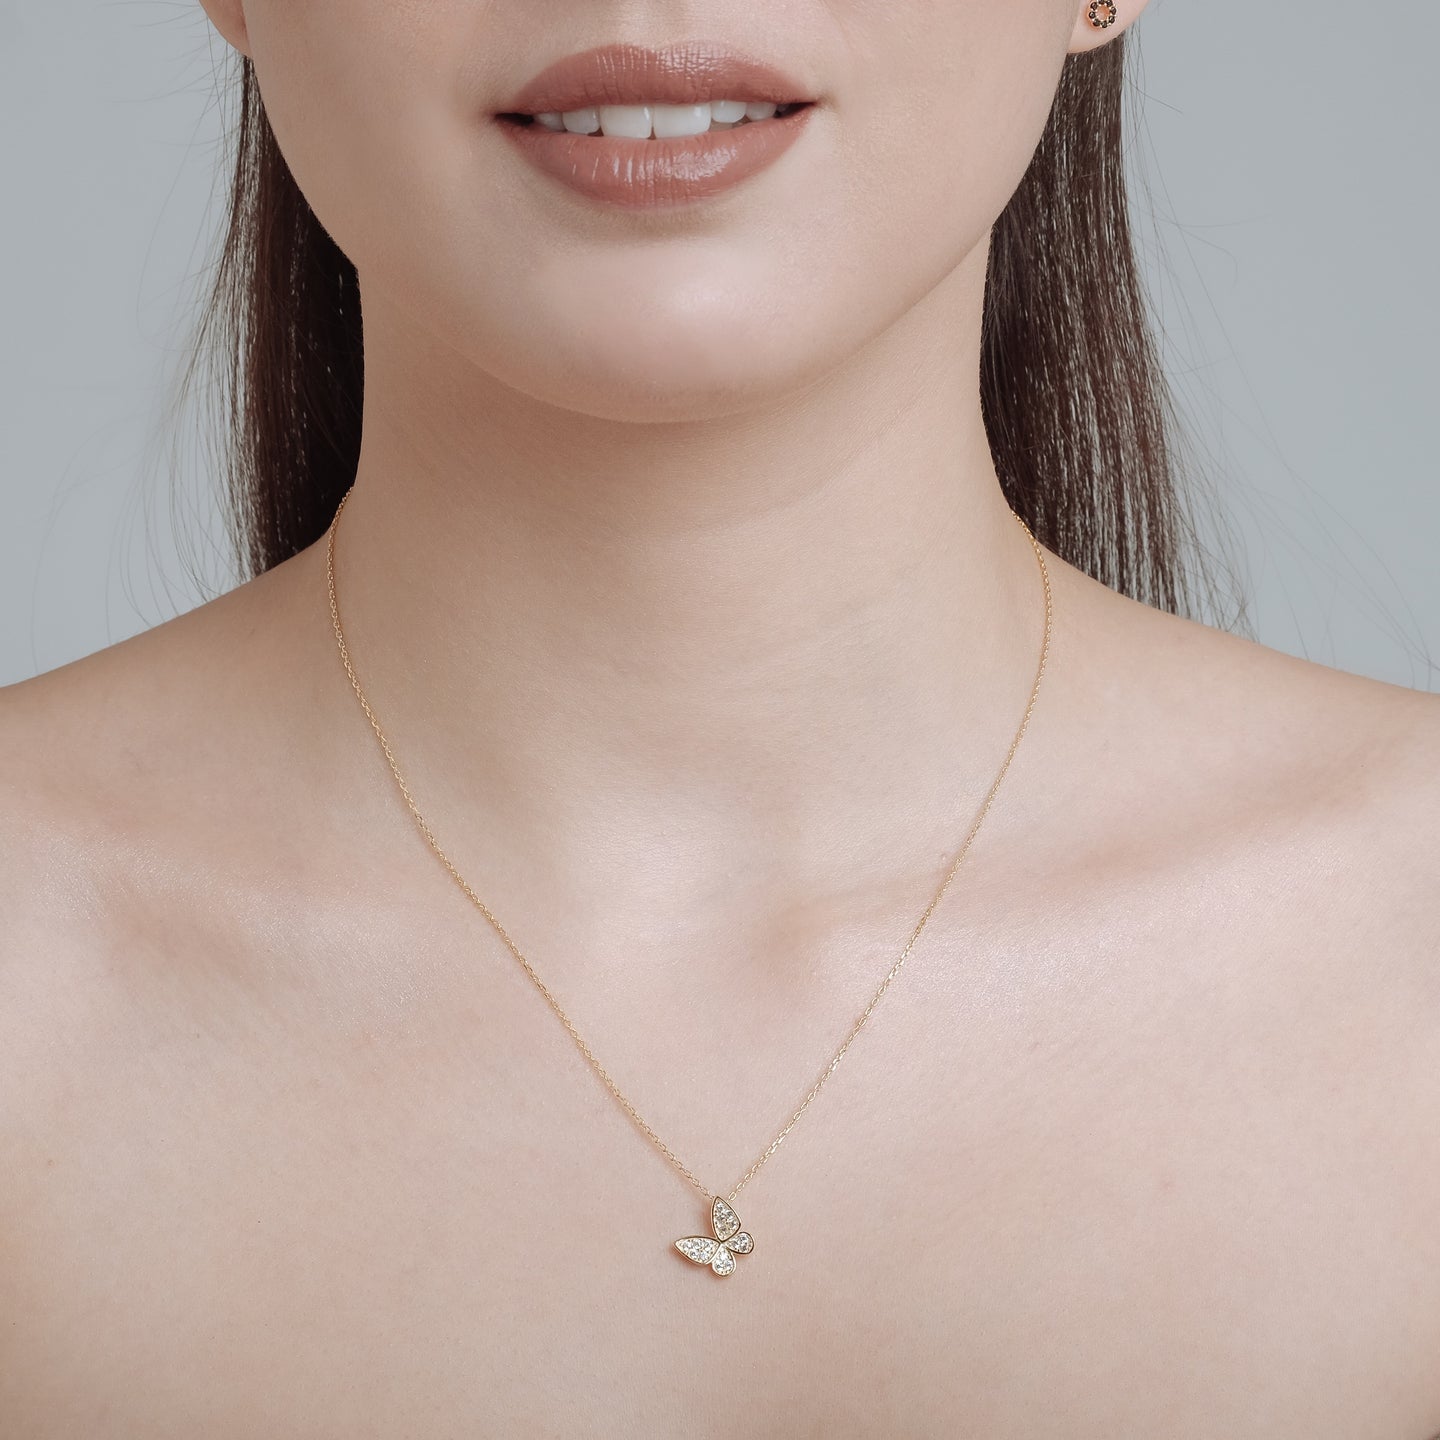 products/rene-cz-necklace-14k-gold-vermeil-4.jpg